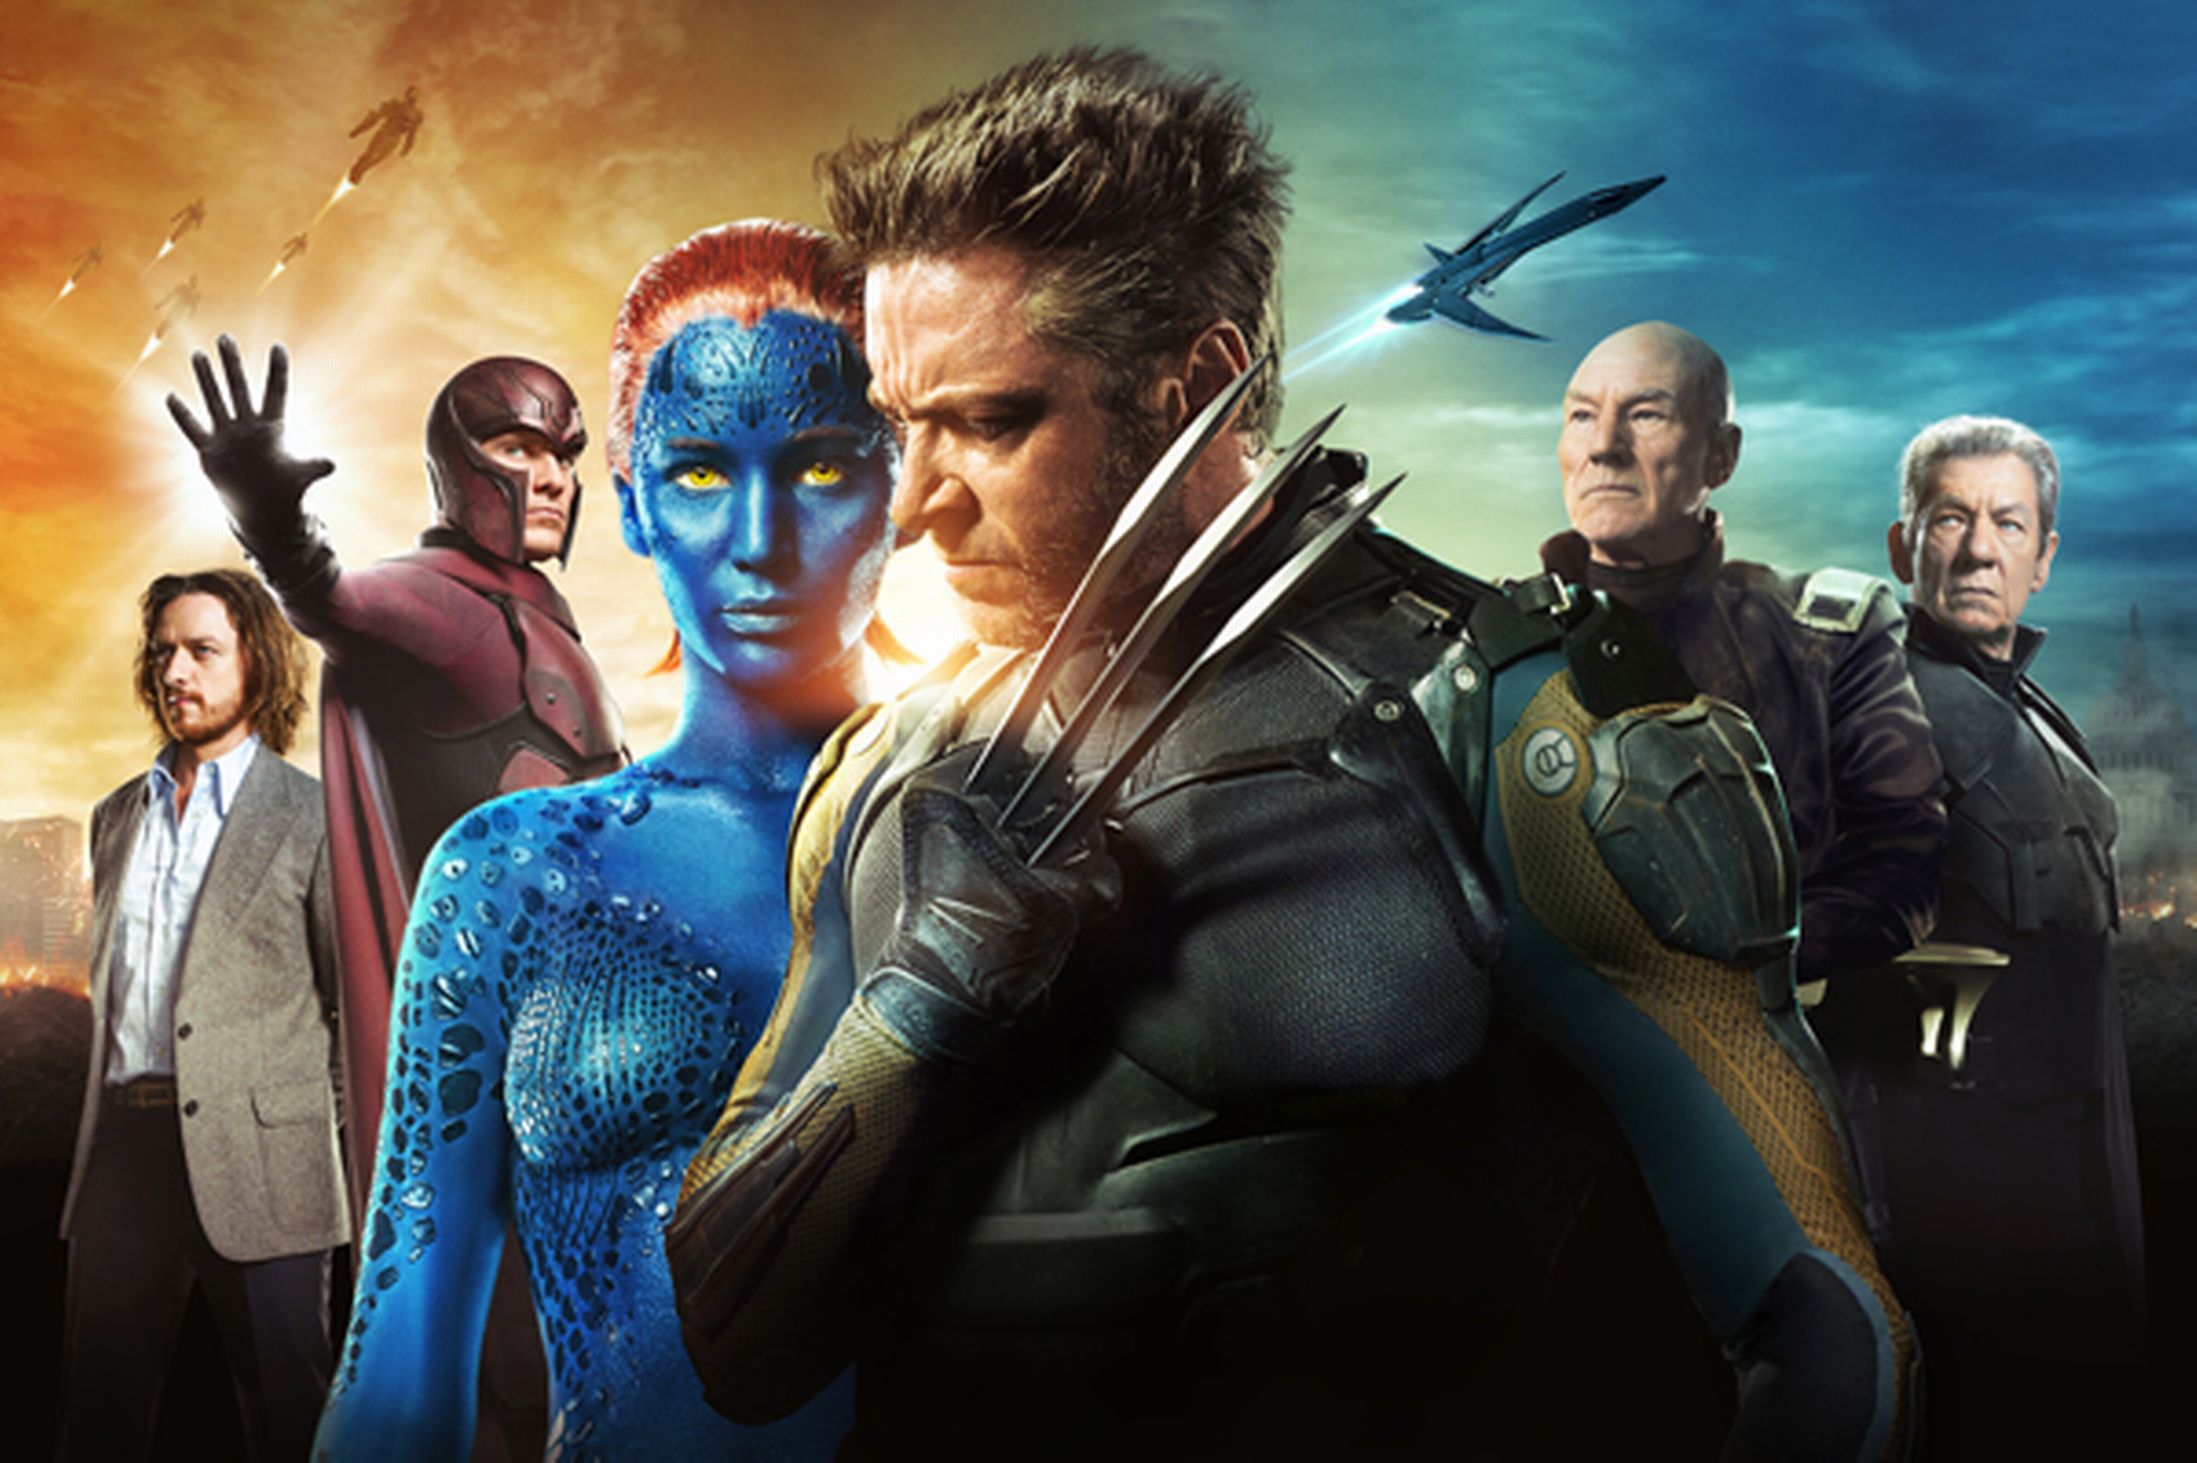 Was X-Men: Days Of Future Past 2014's Best Film?